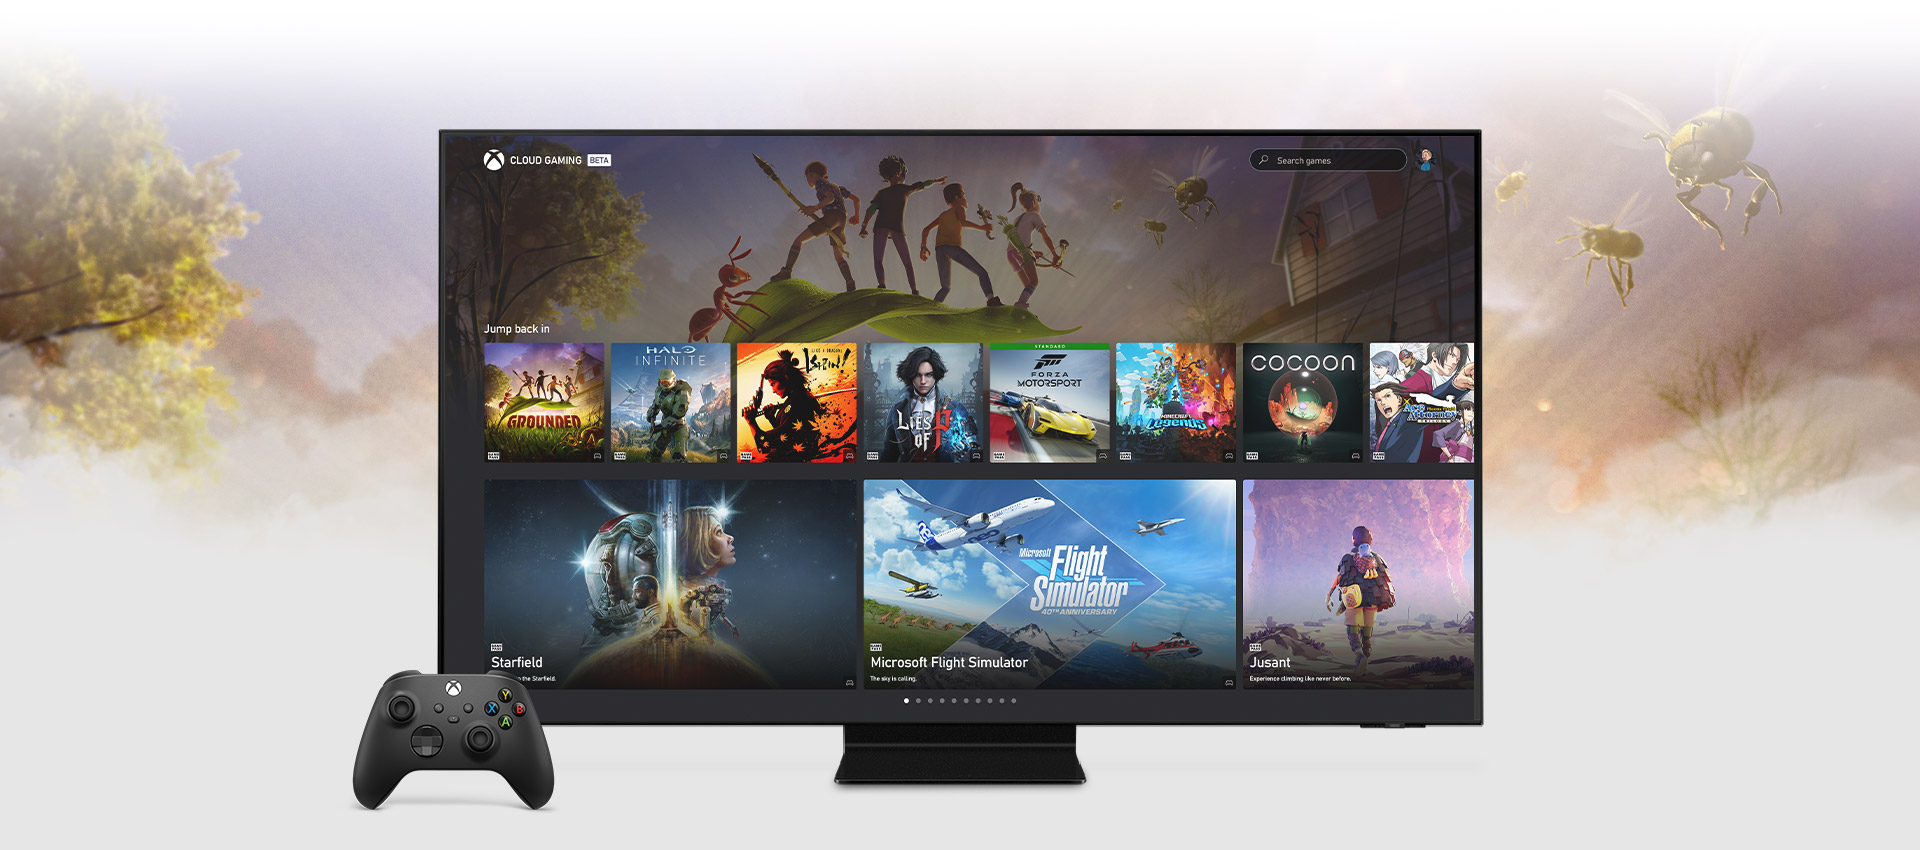 Xbox App Home screen on a Samsung smart TV